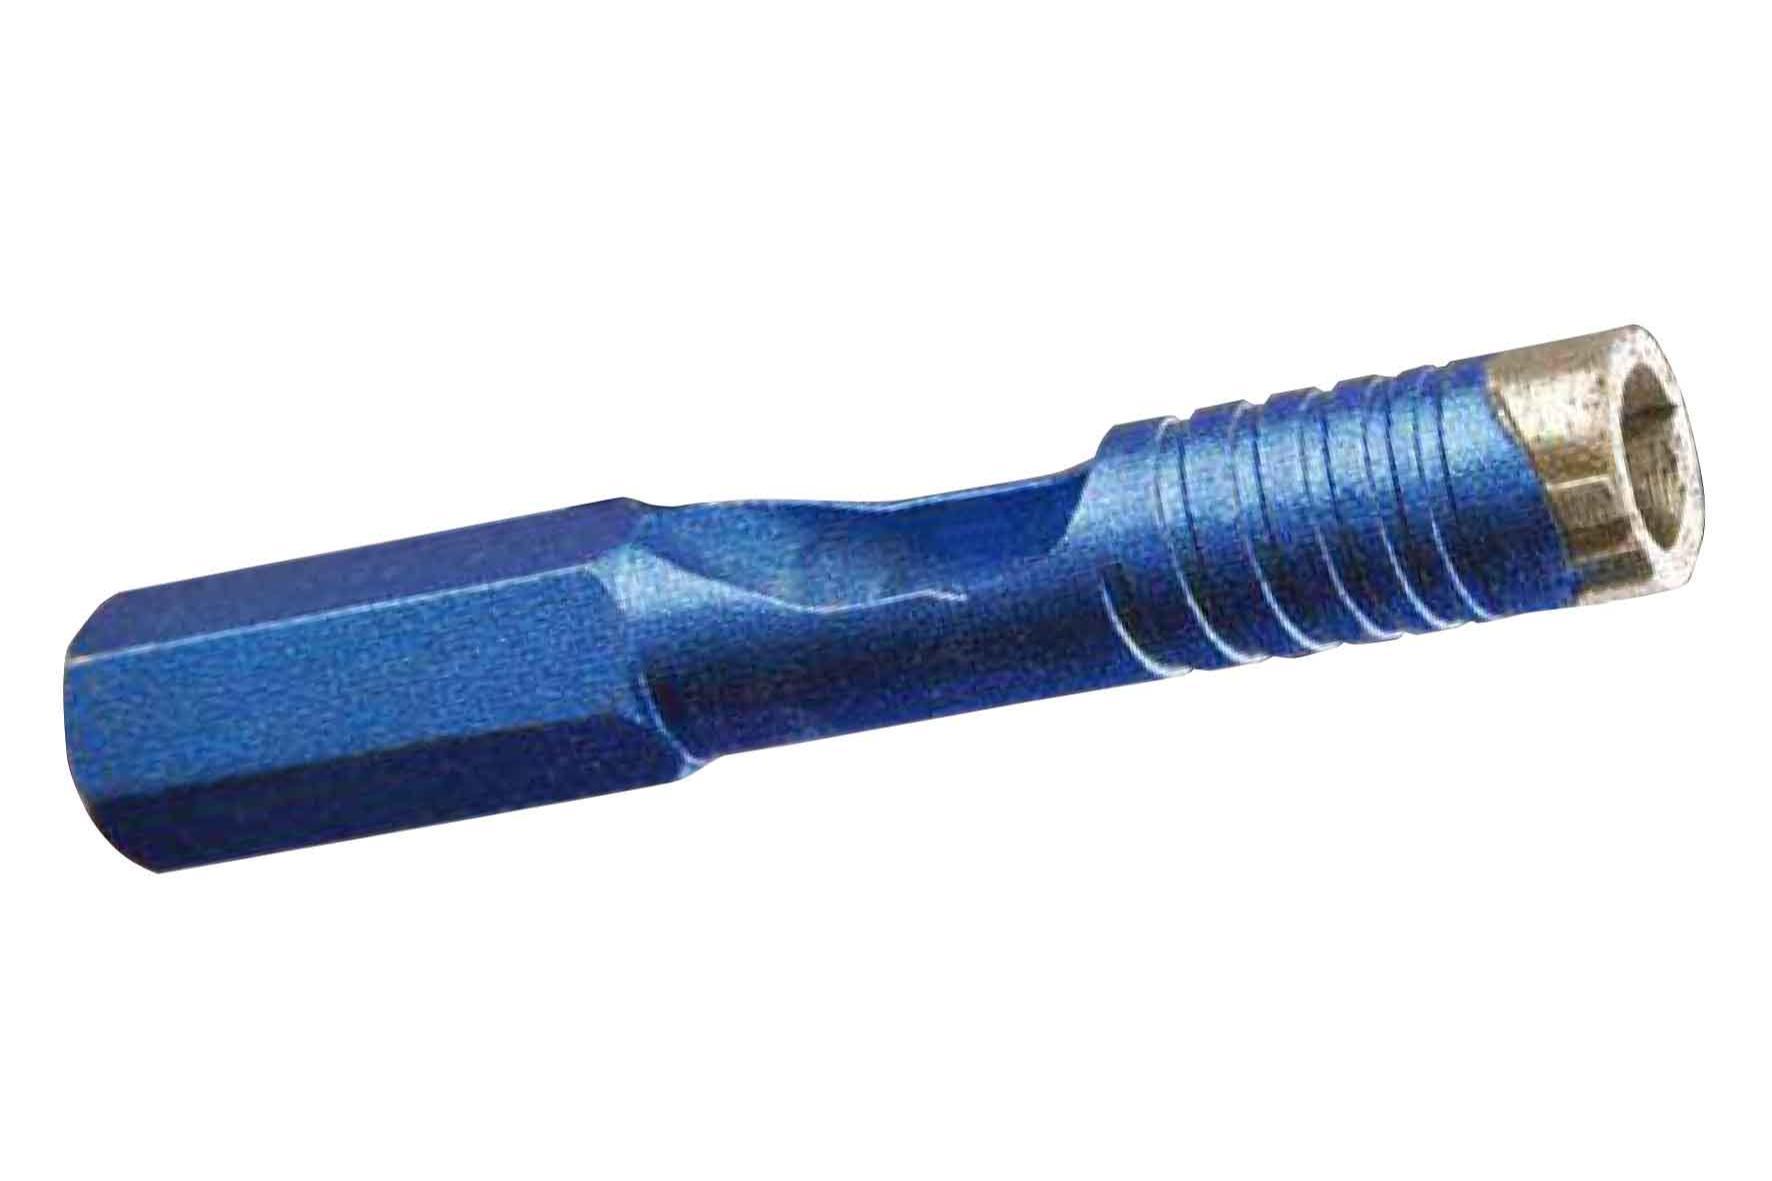 DIAGER 426D06 DIAGER BROCA BLUE CERAM 6mm